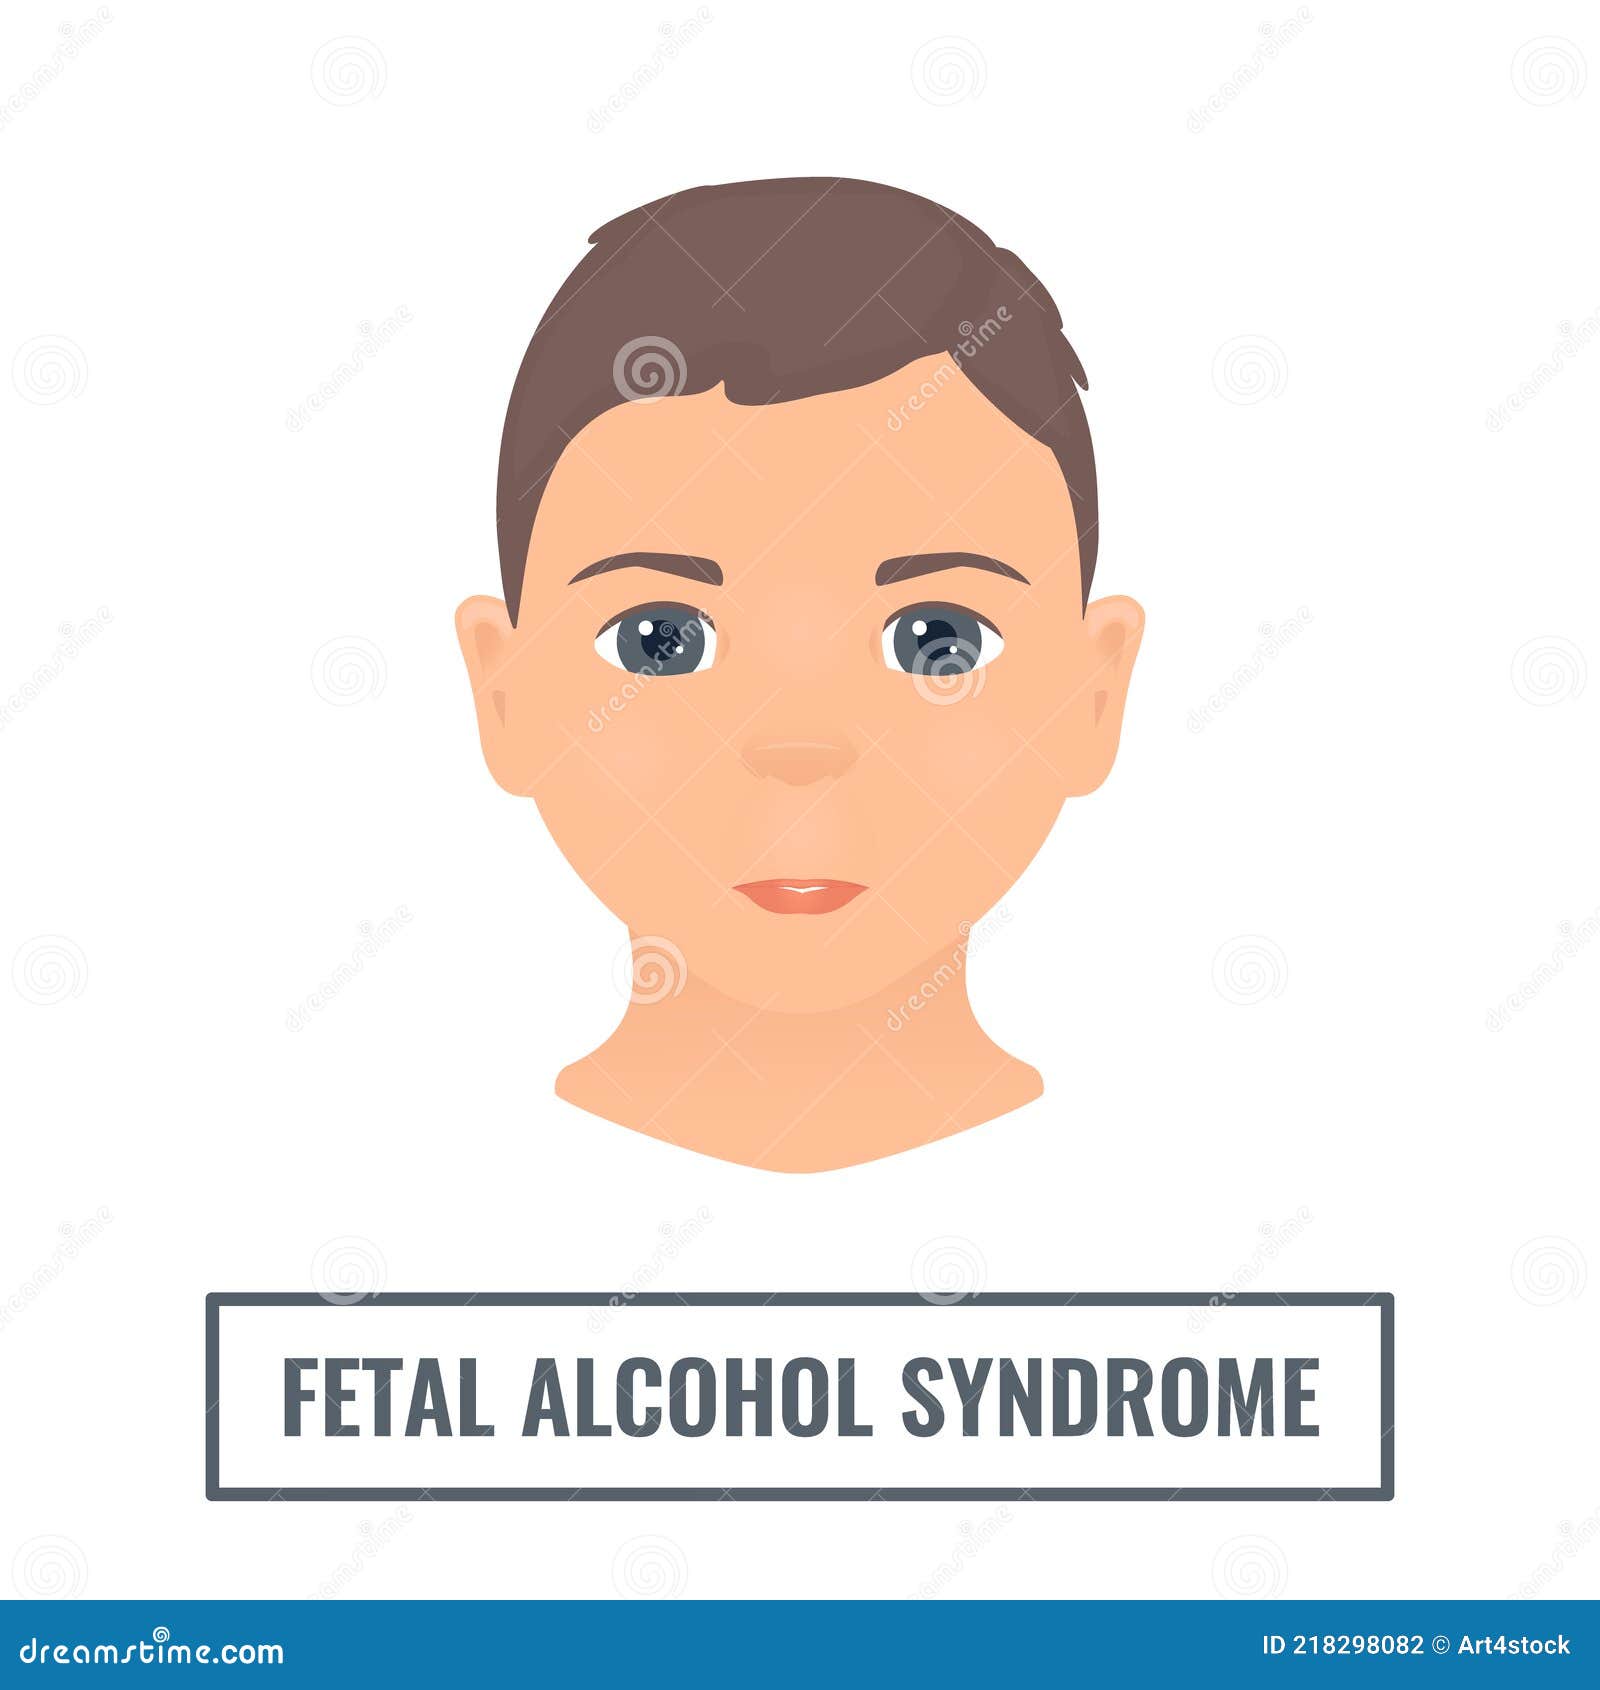 Syndrome fetal alcohol symptoms of Fetal Alcohol